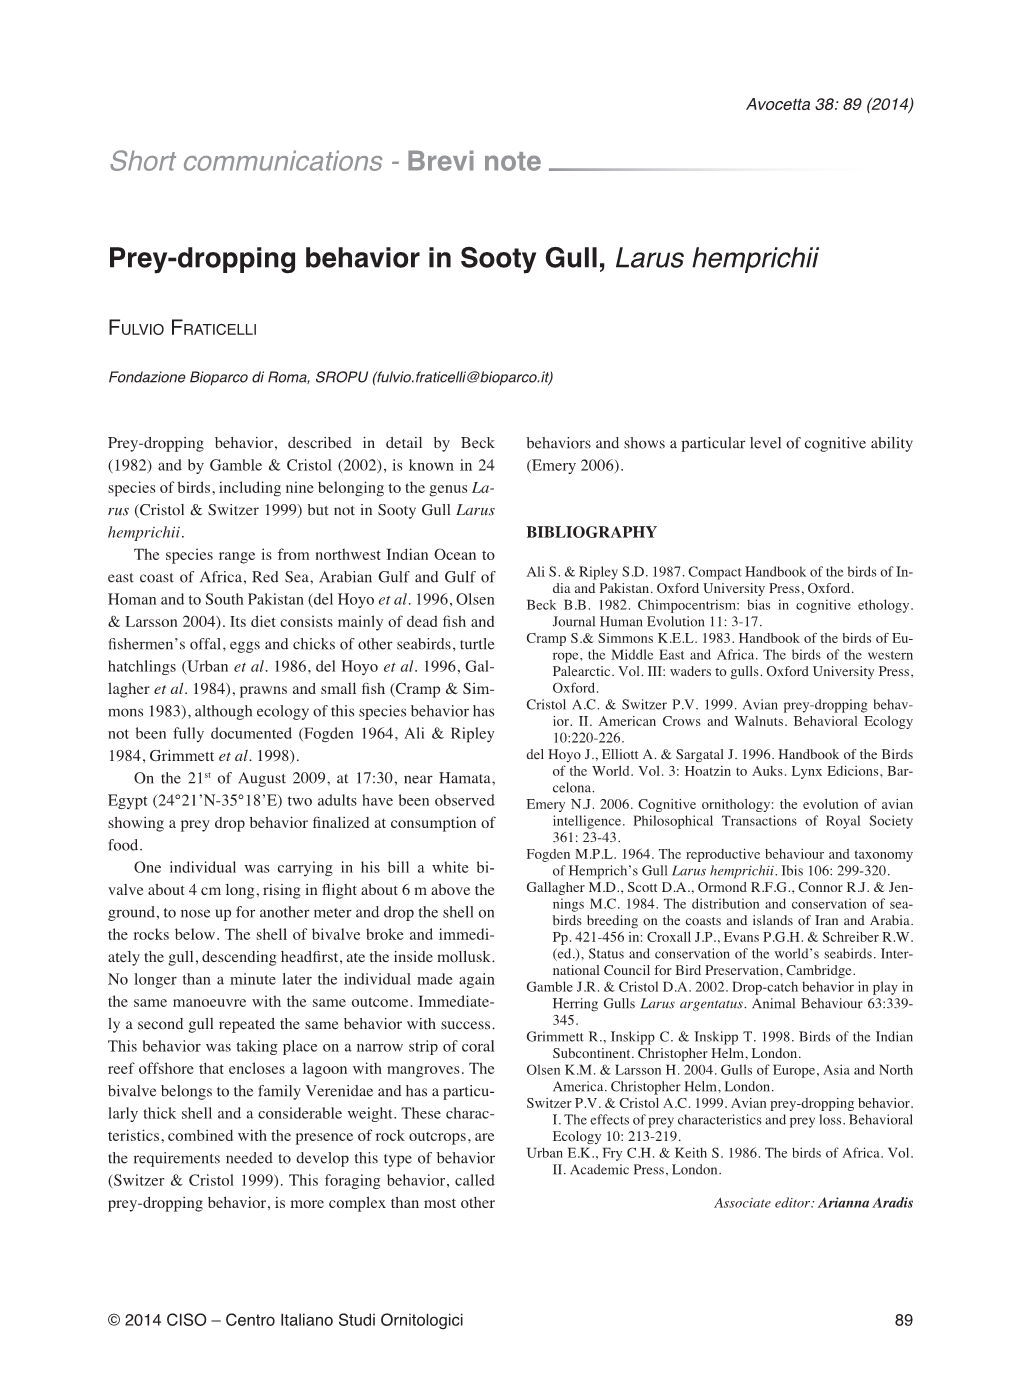 Prey-Dropping Behavior in Sooty Gull, Larus Hemprichii Short